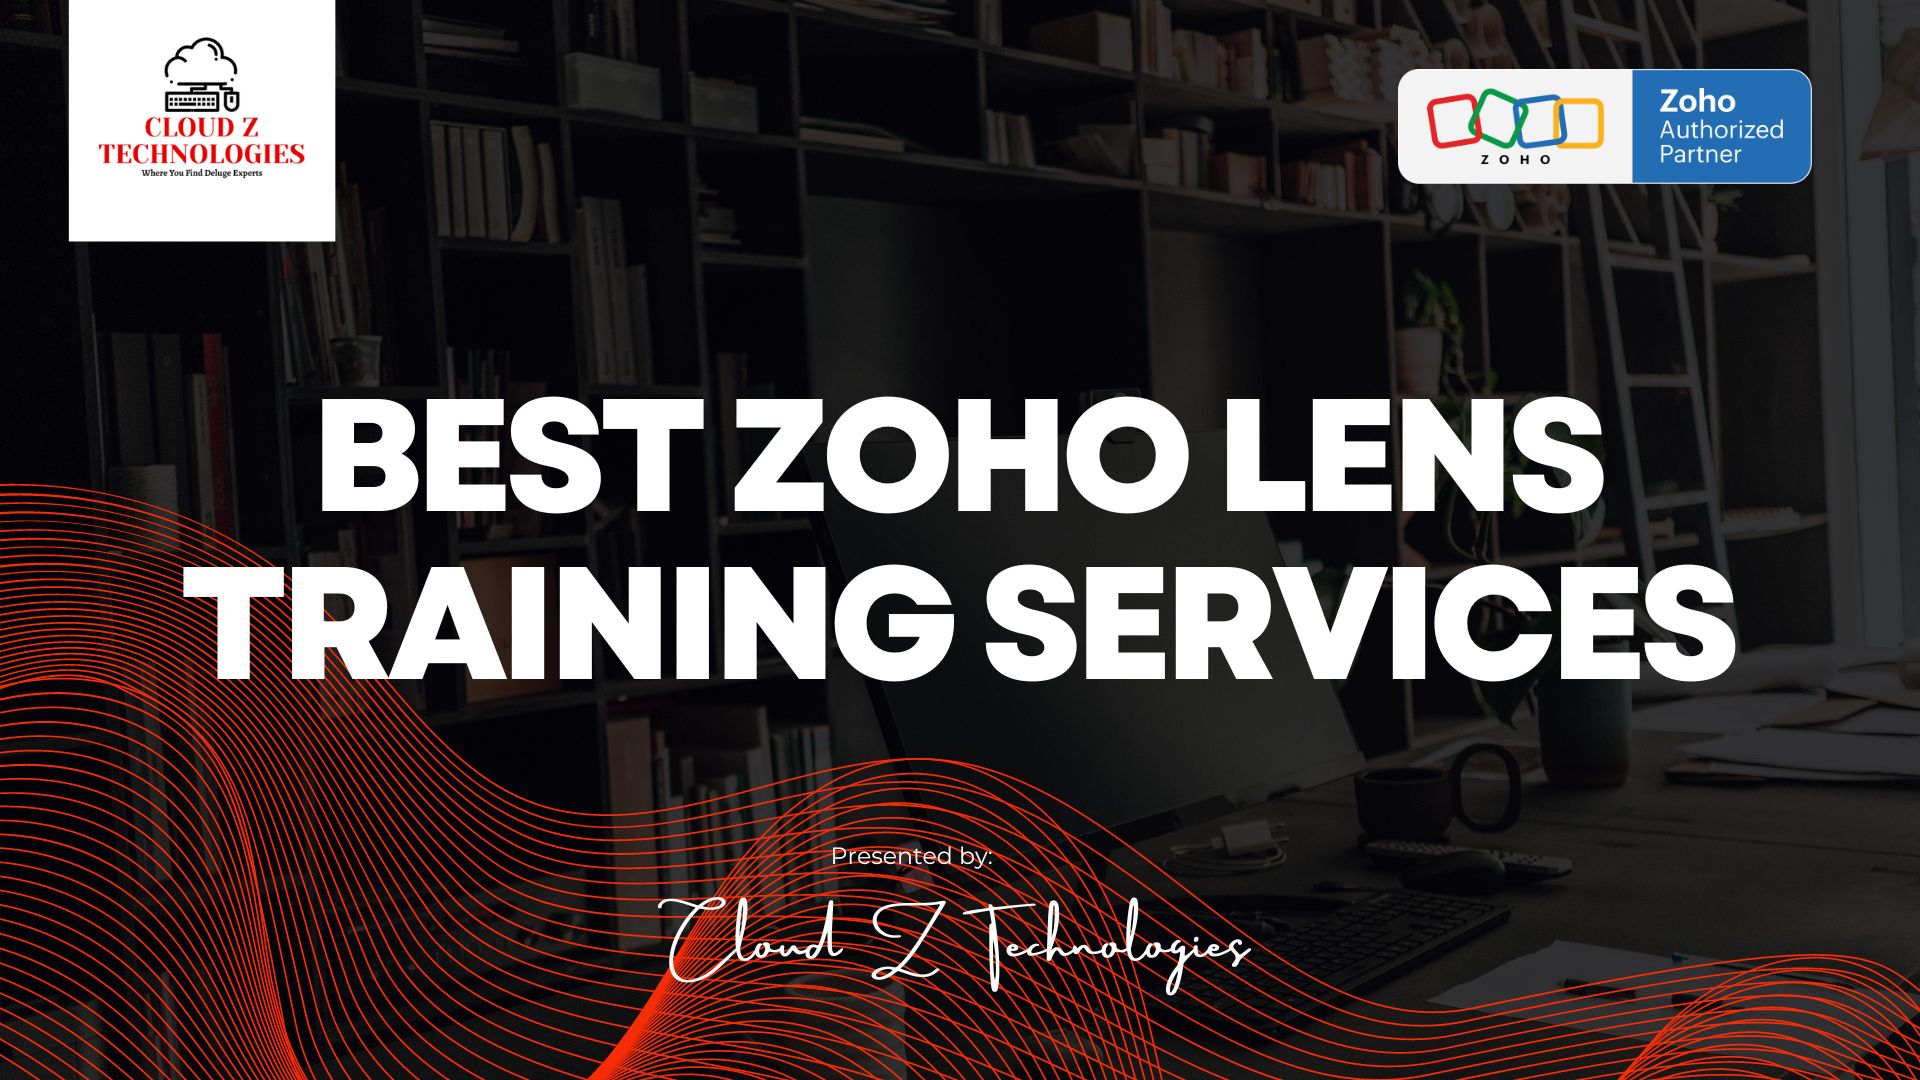 Zoho Lens training services